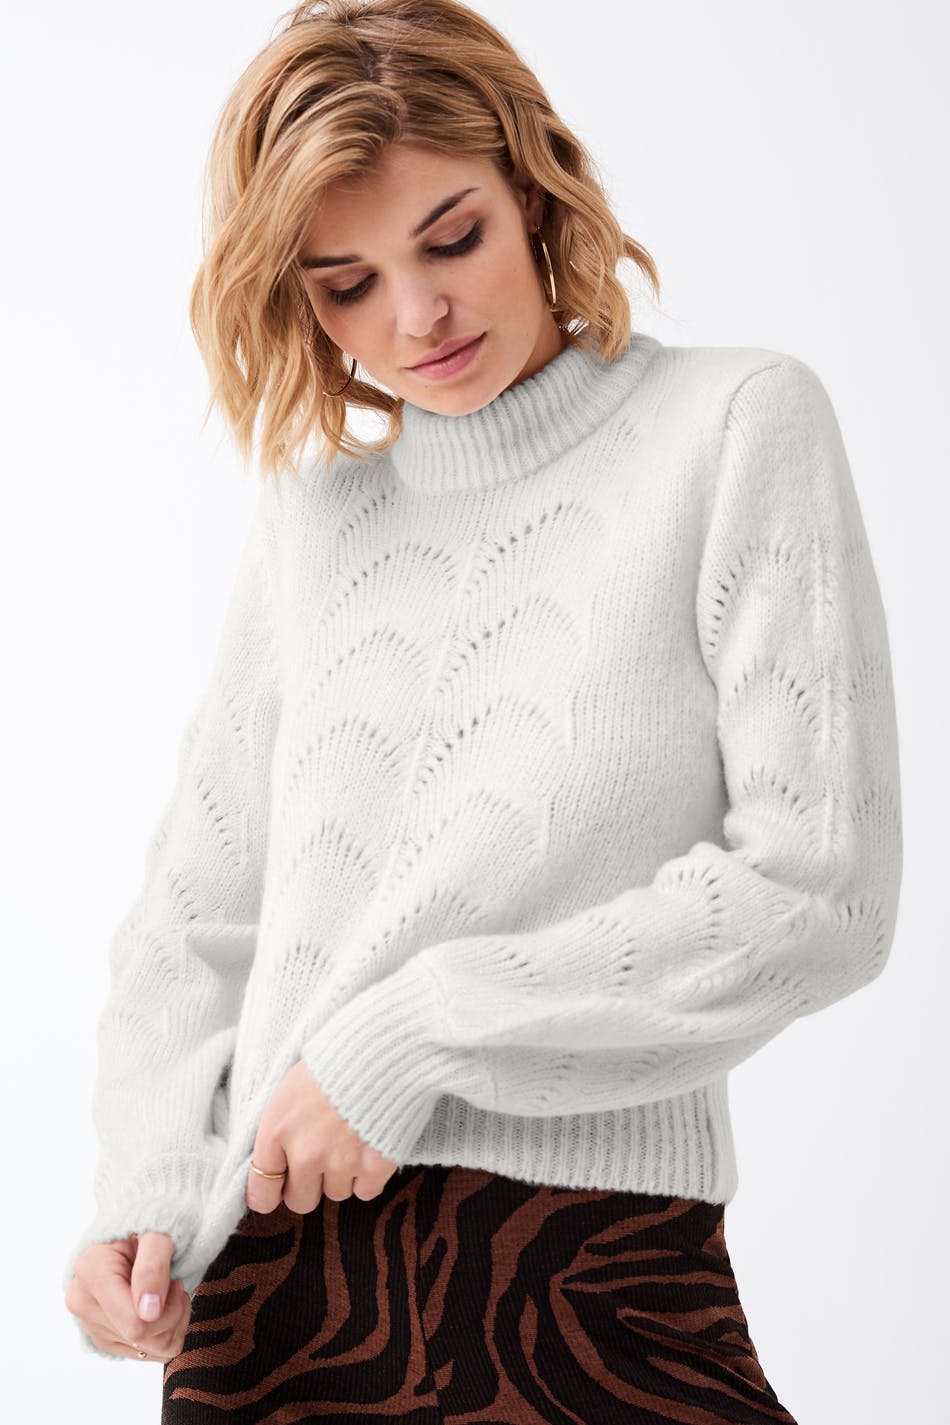 Kiara knitted - knittedsweaters - Gina